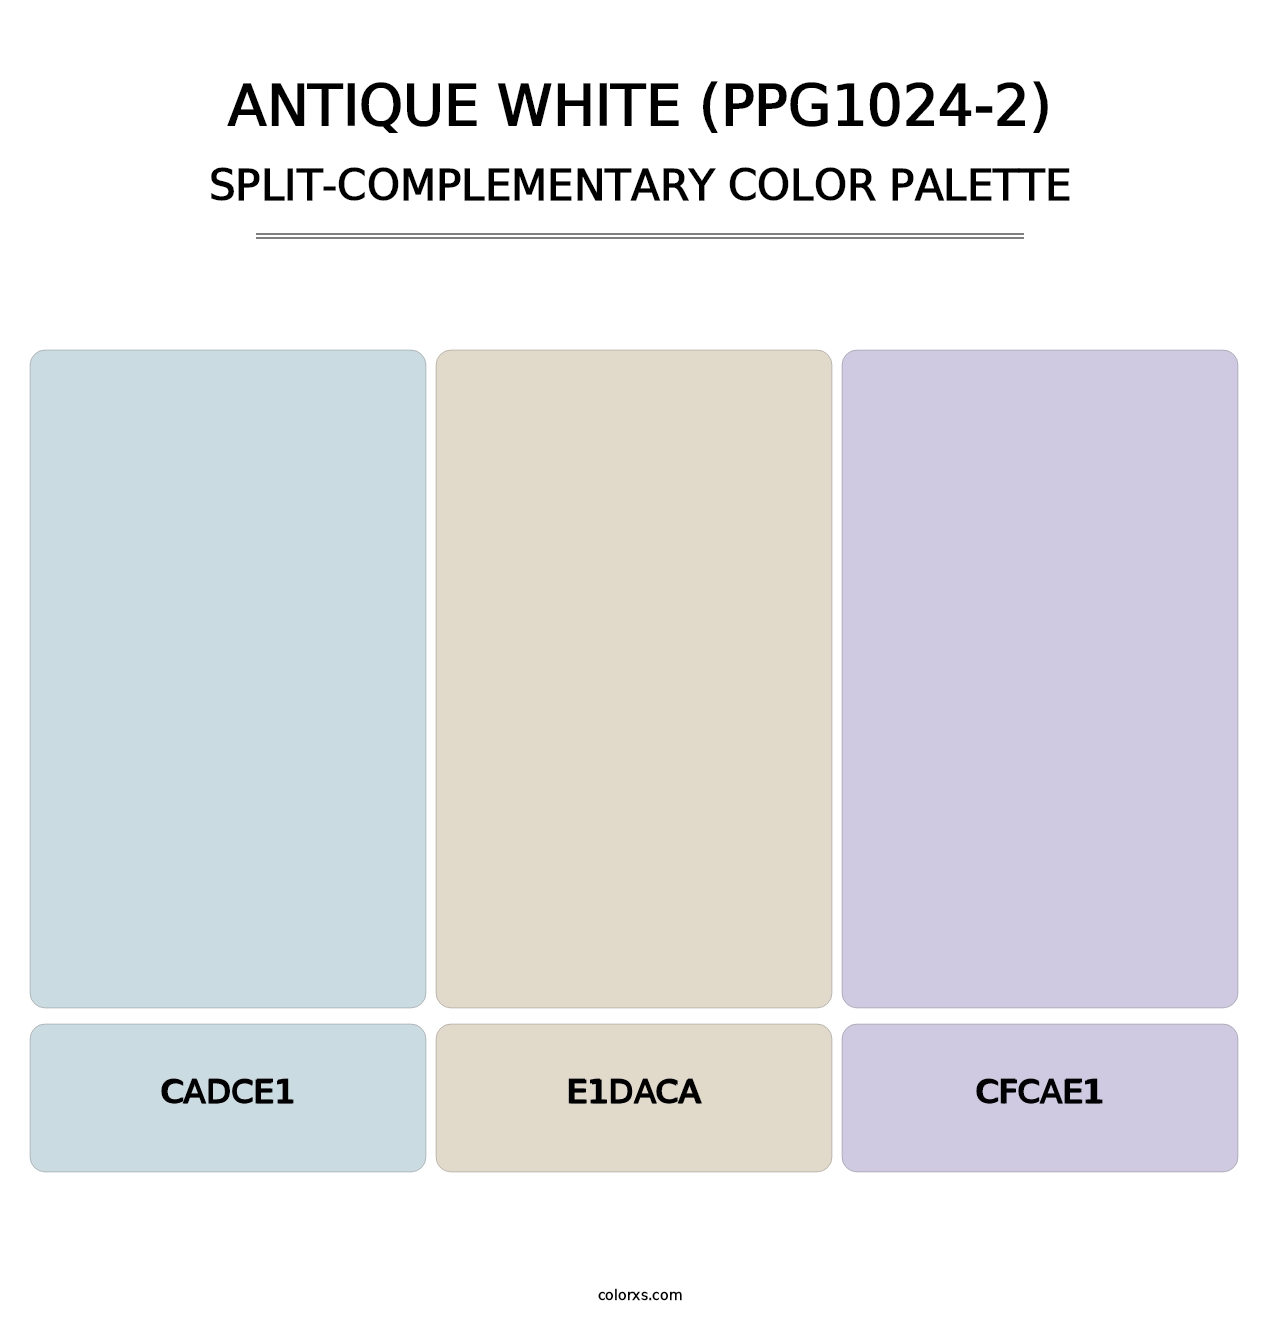 Antique White (PPG1024-2) - Split-Complementary Color Palette